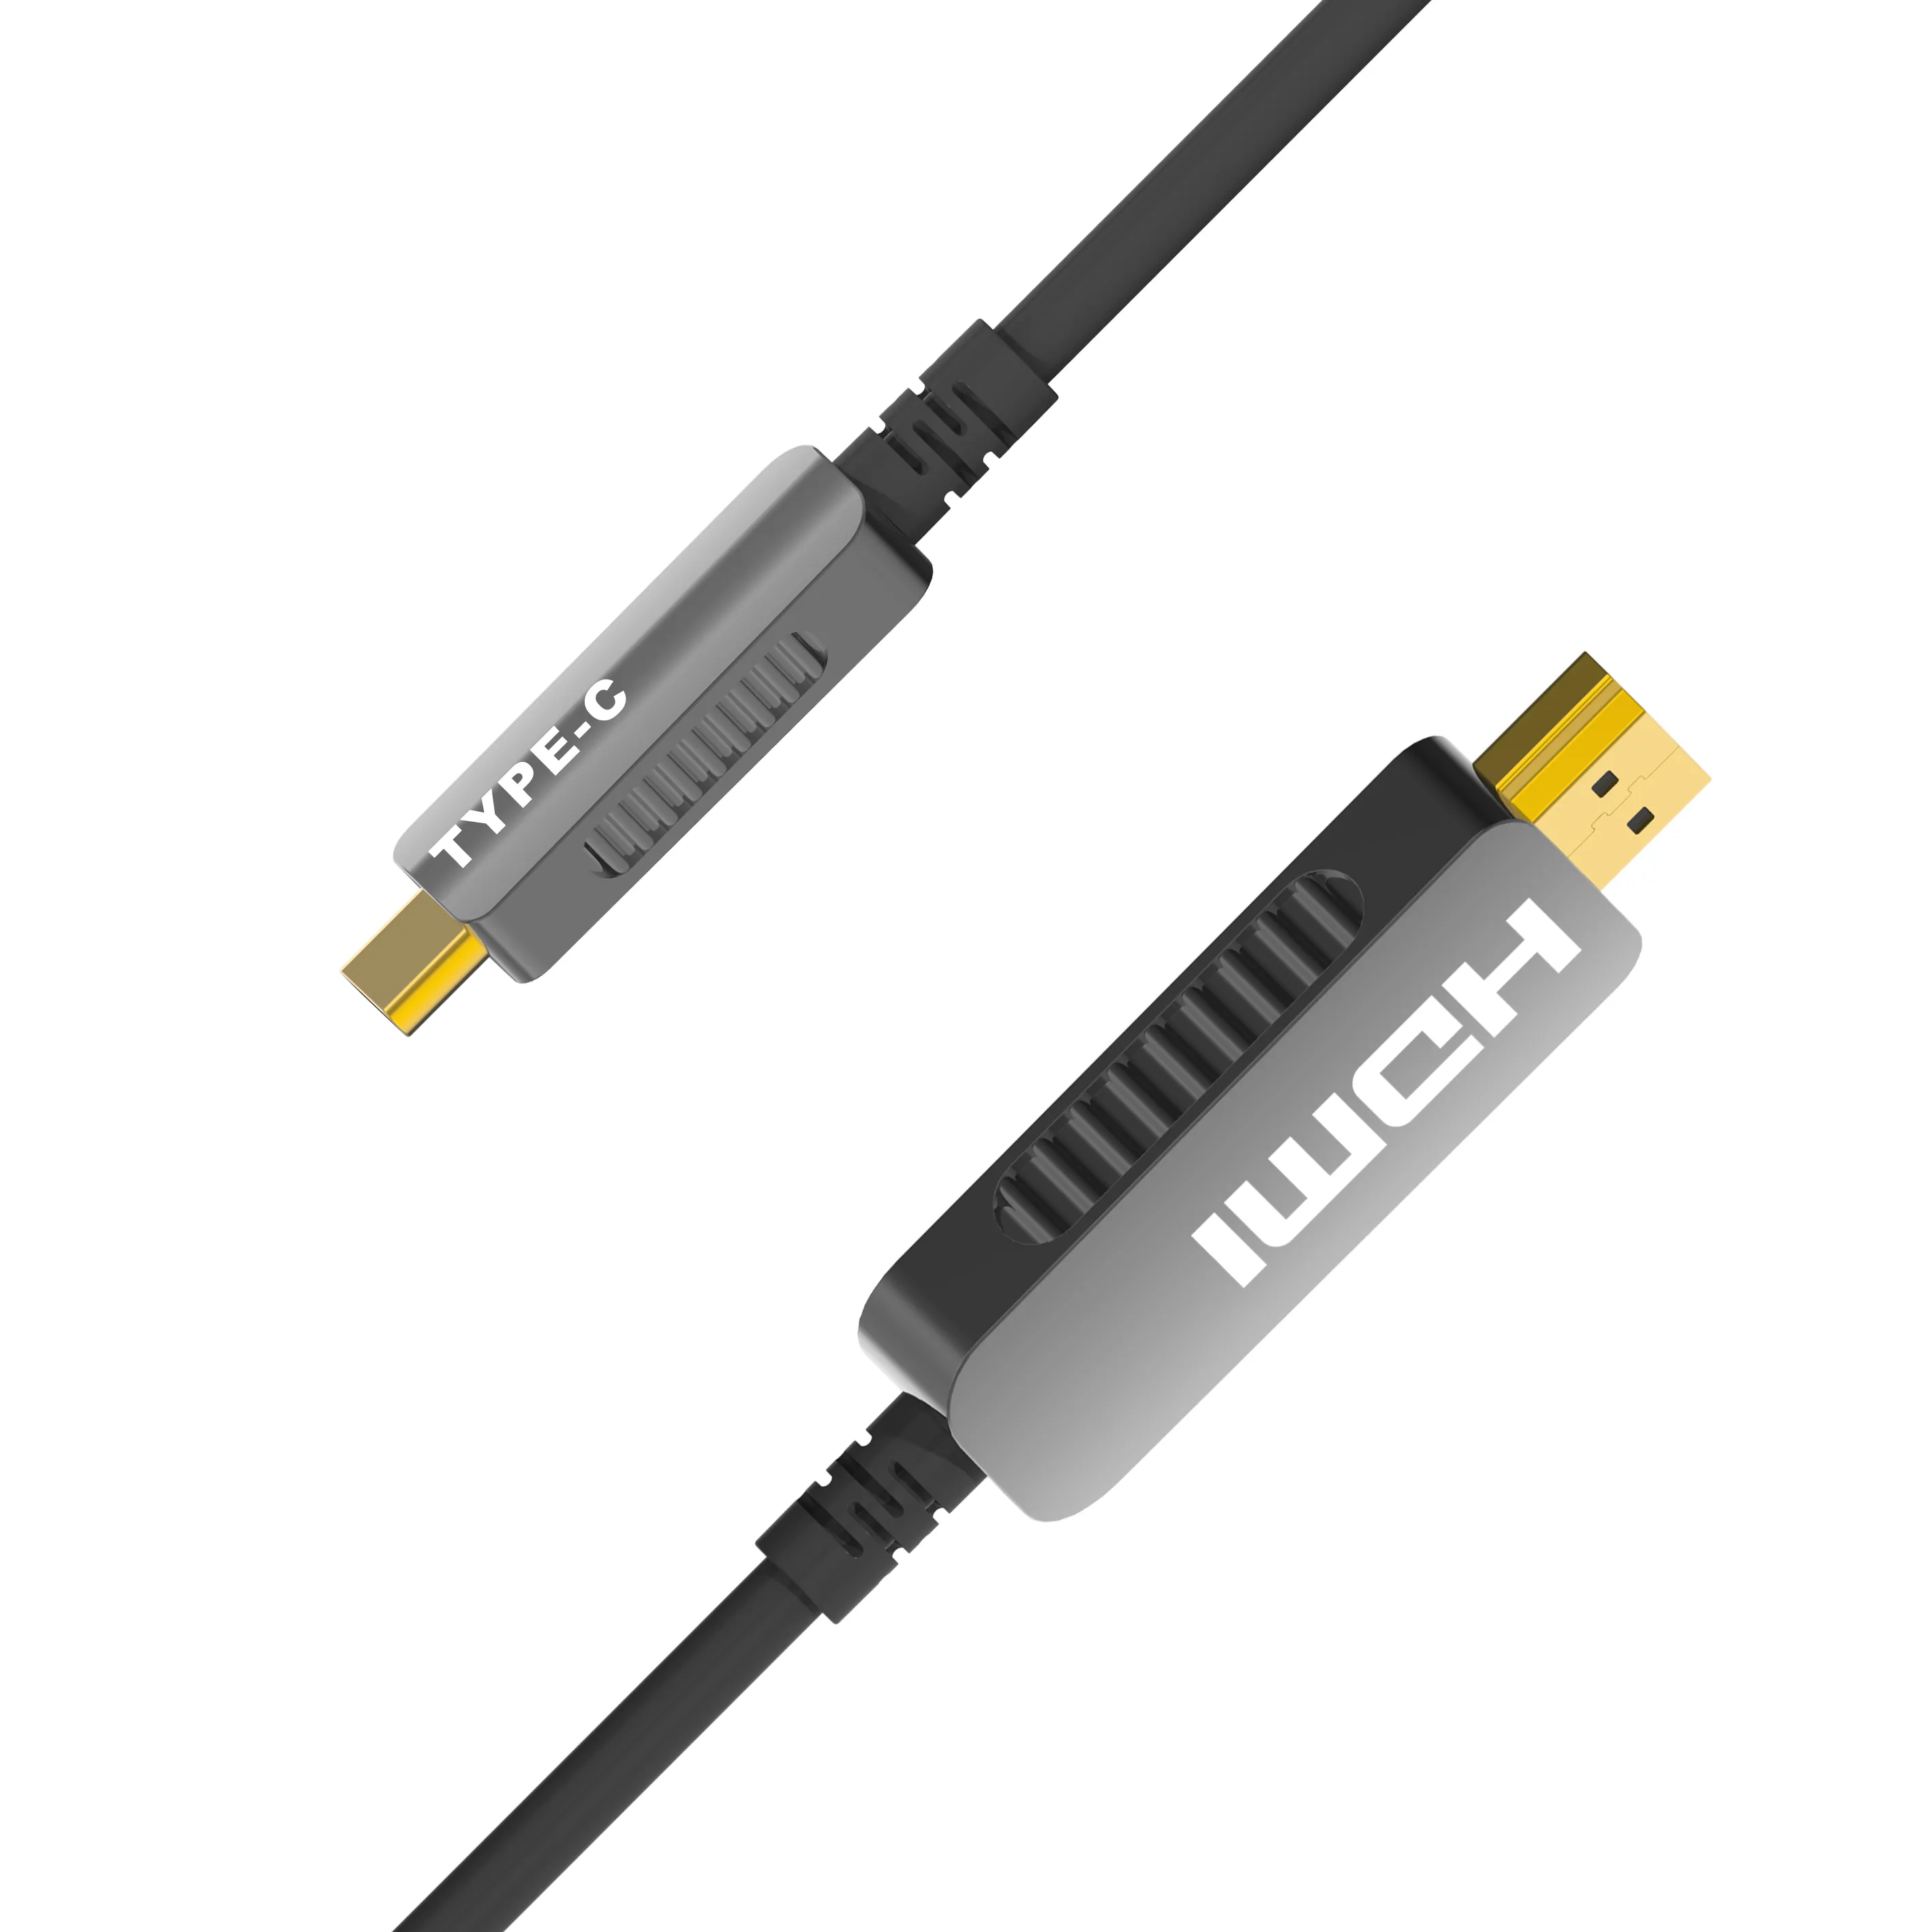 3.1 USB-C to HDMI AOC Fiber and Copper Wires Cable 4K @60Hz USB-C Port Laptops/ Phones with DP Alt Mode